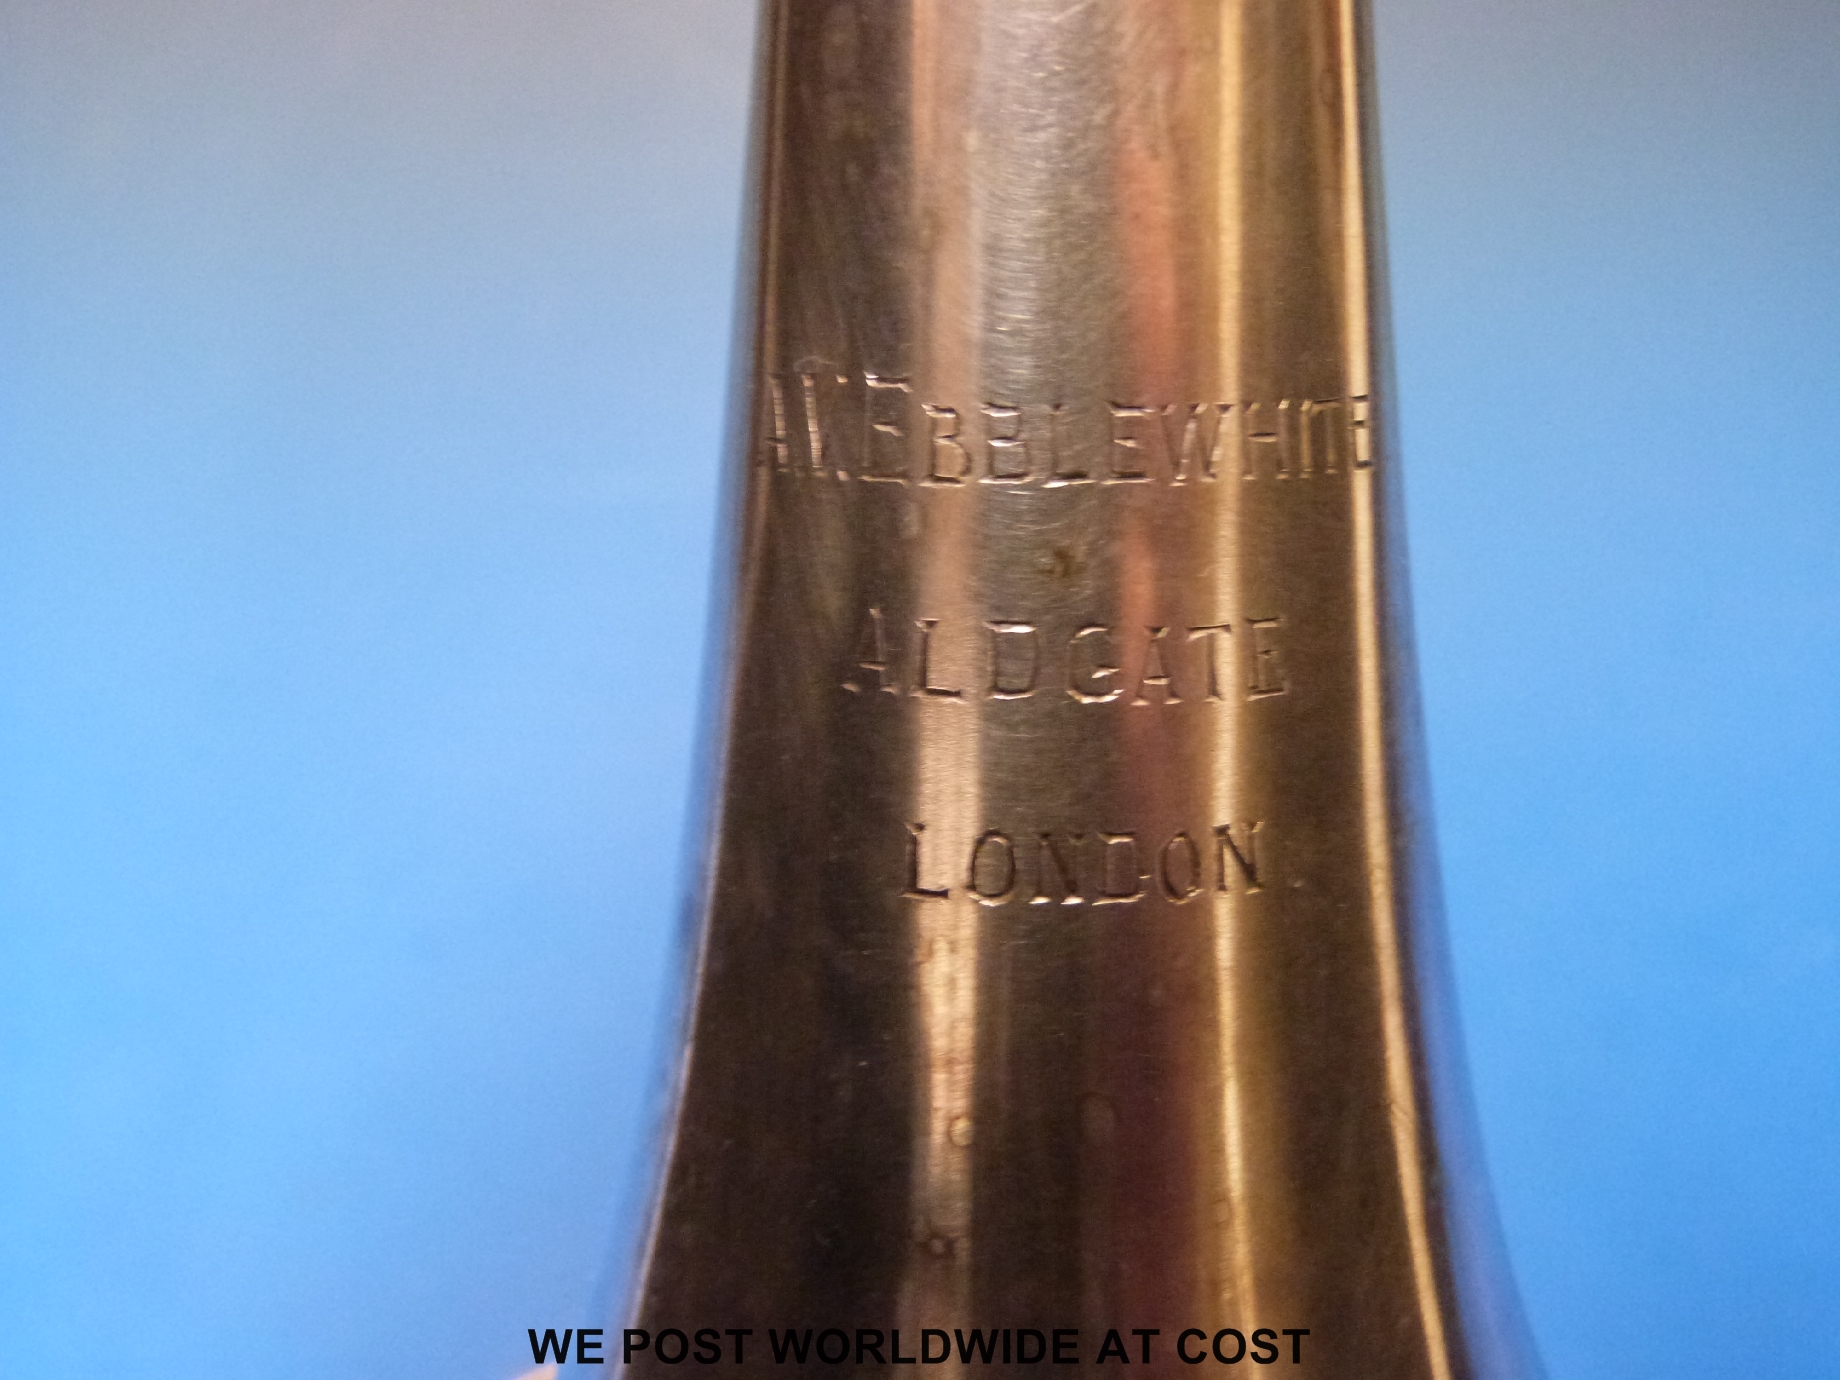 AV Ebblewhite of Aldgate, London, silver plated trumpet in case. - Image 2 of 2